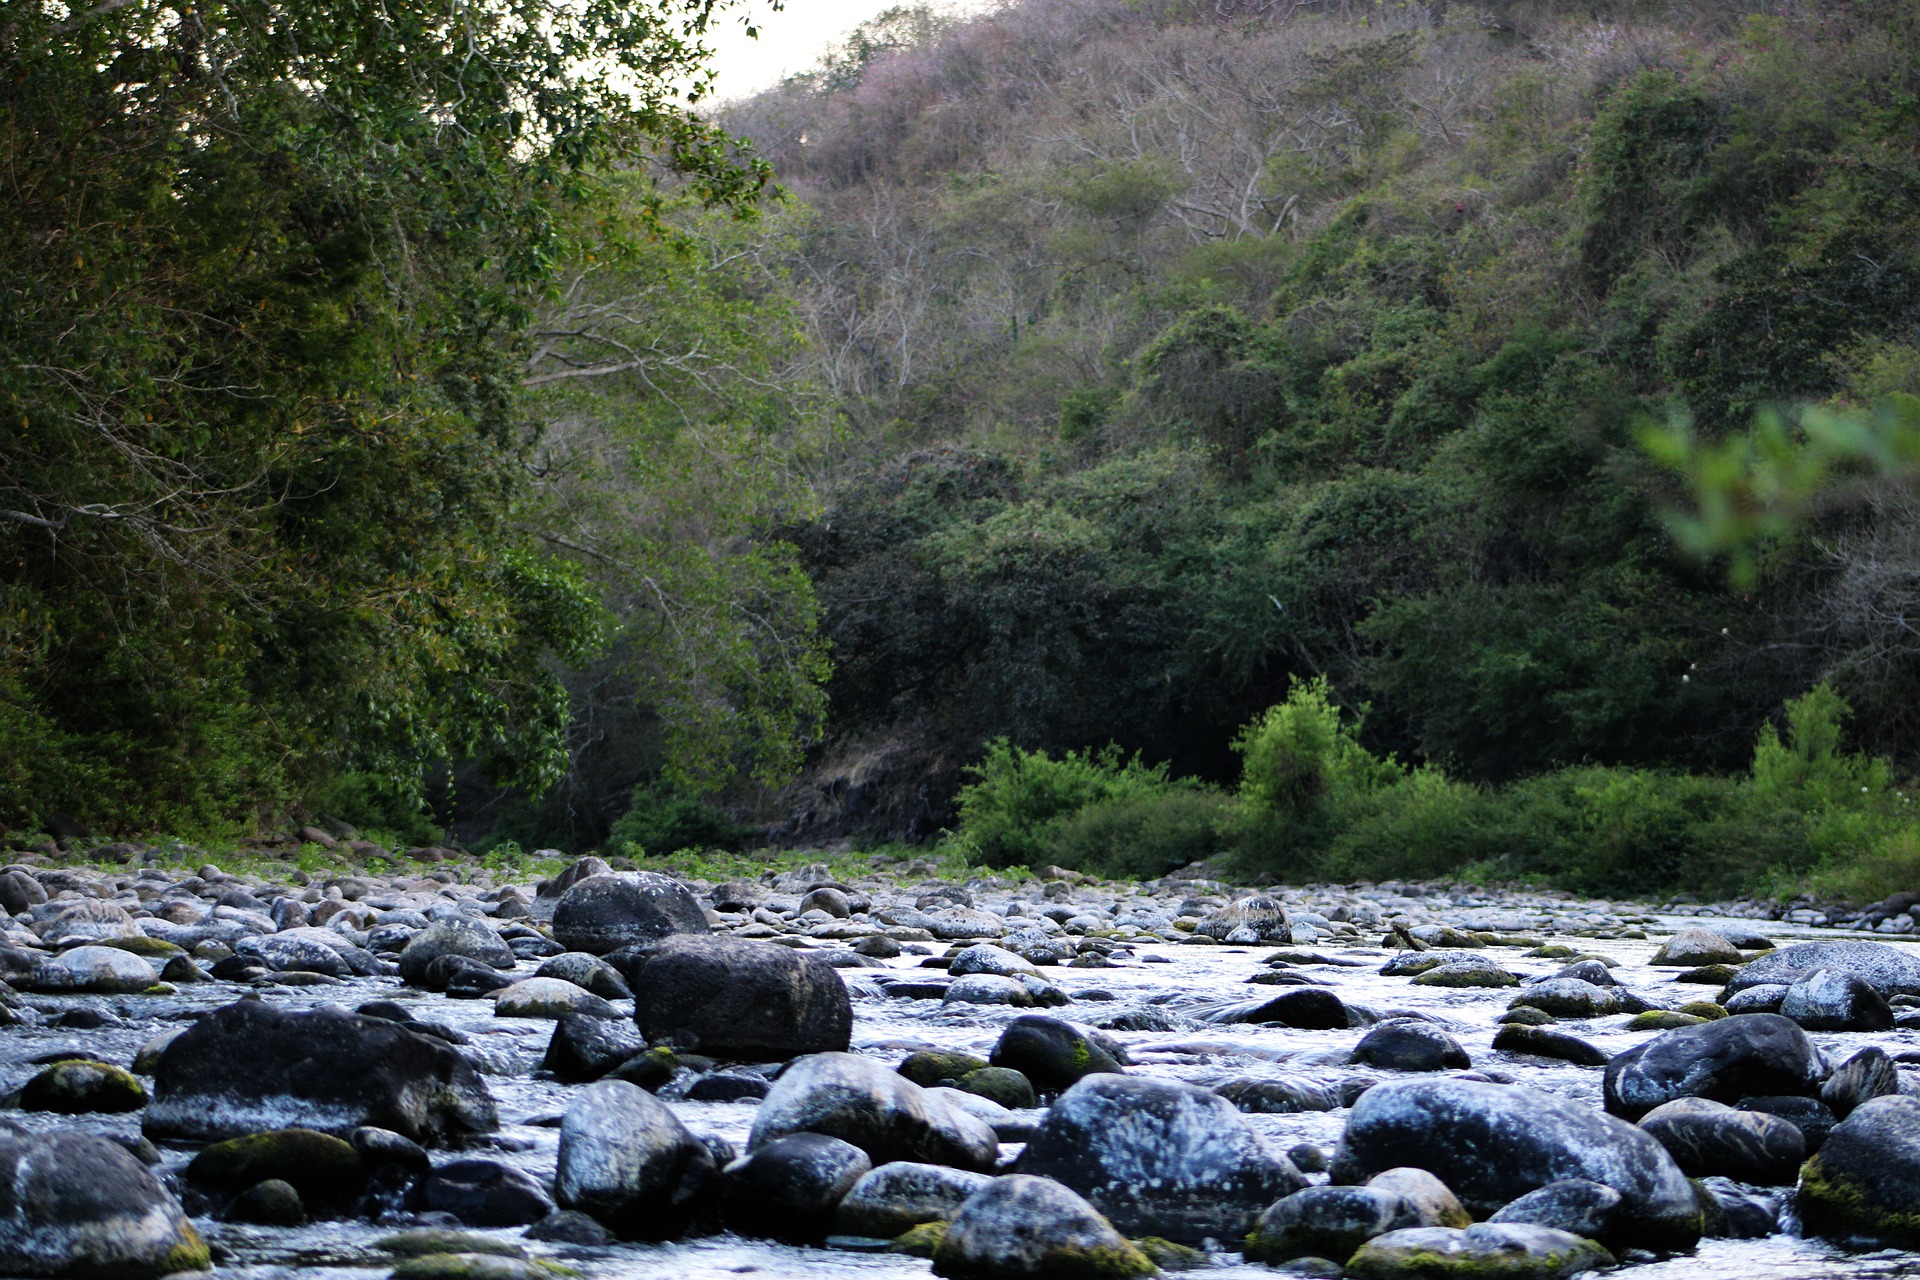 River 